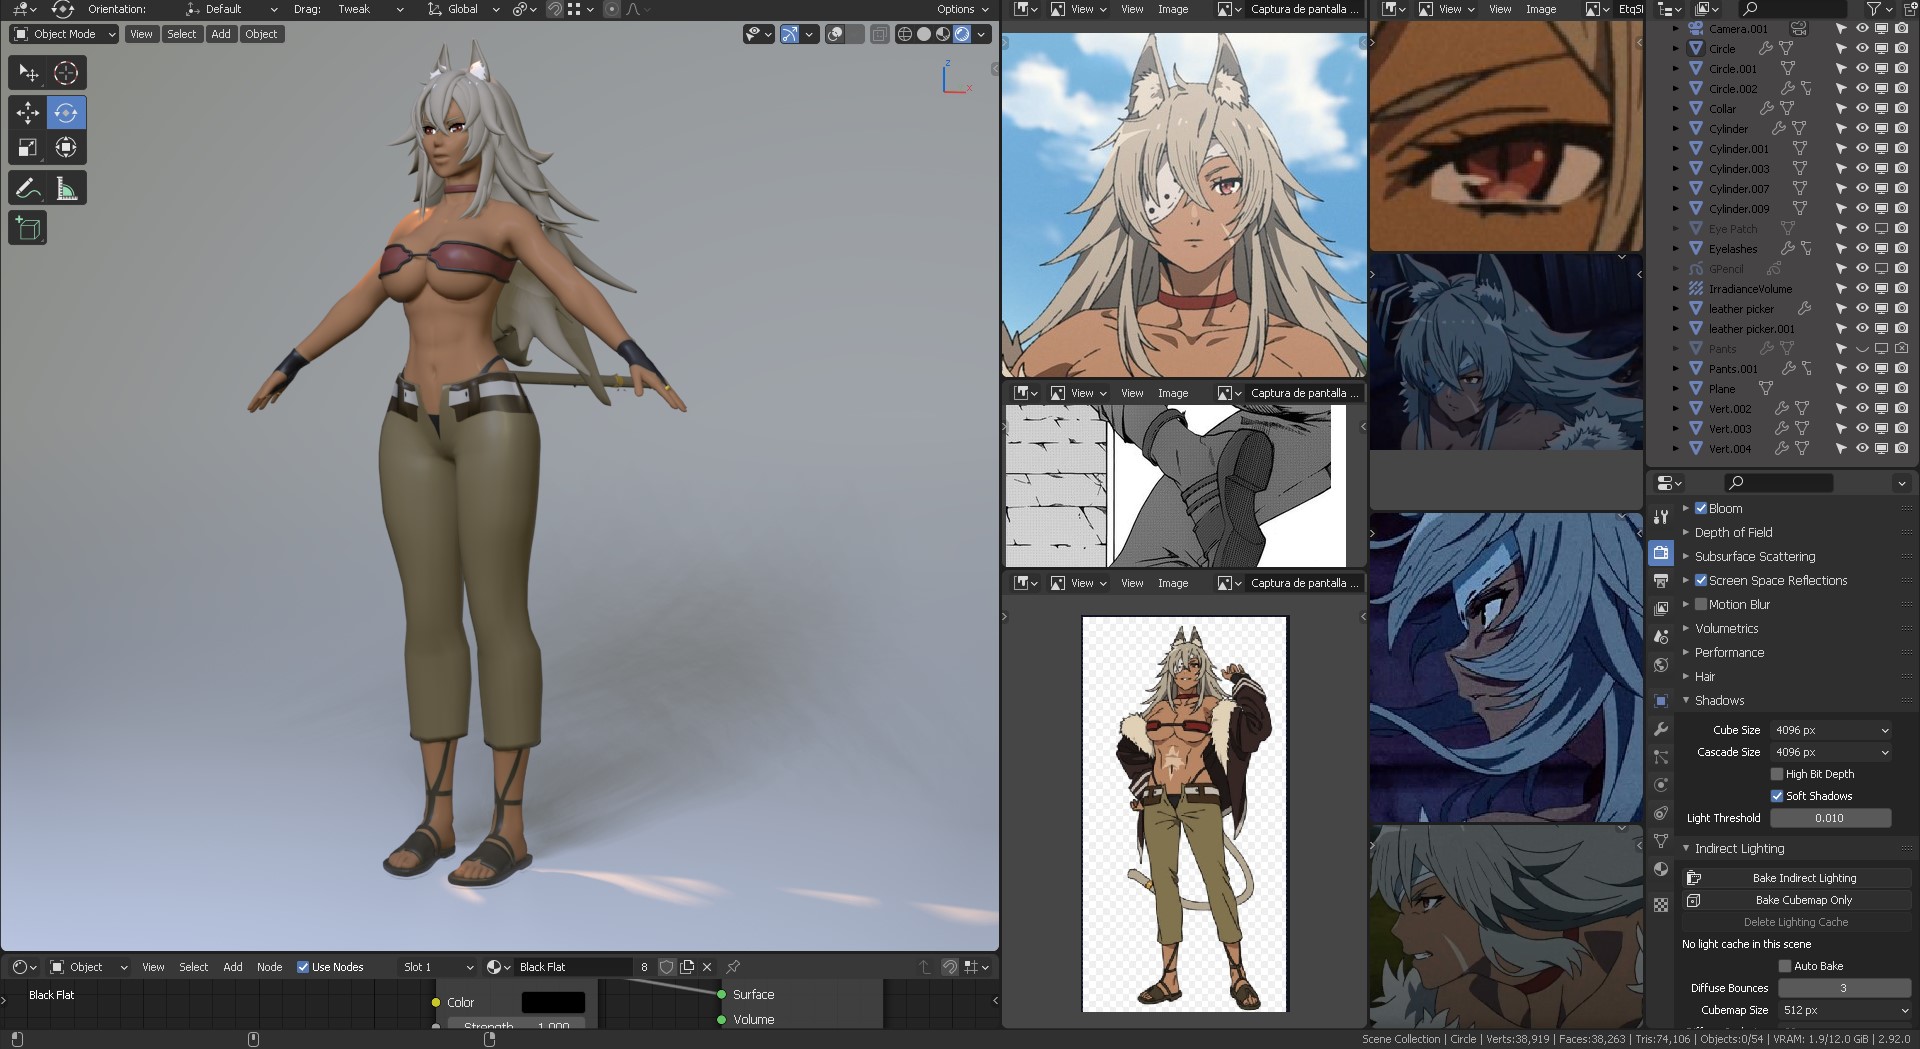 Anime Warrior Wolf Girl - Fan Art - Finished Projects - Blender